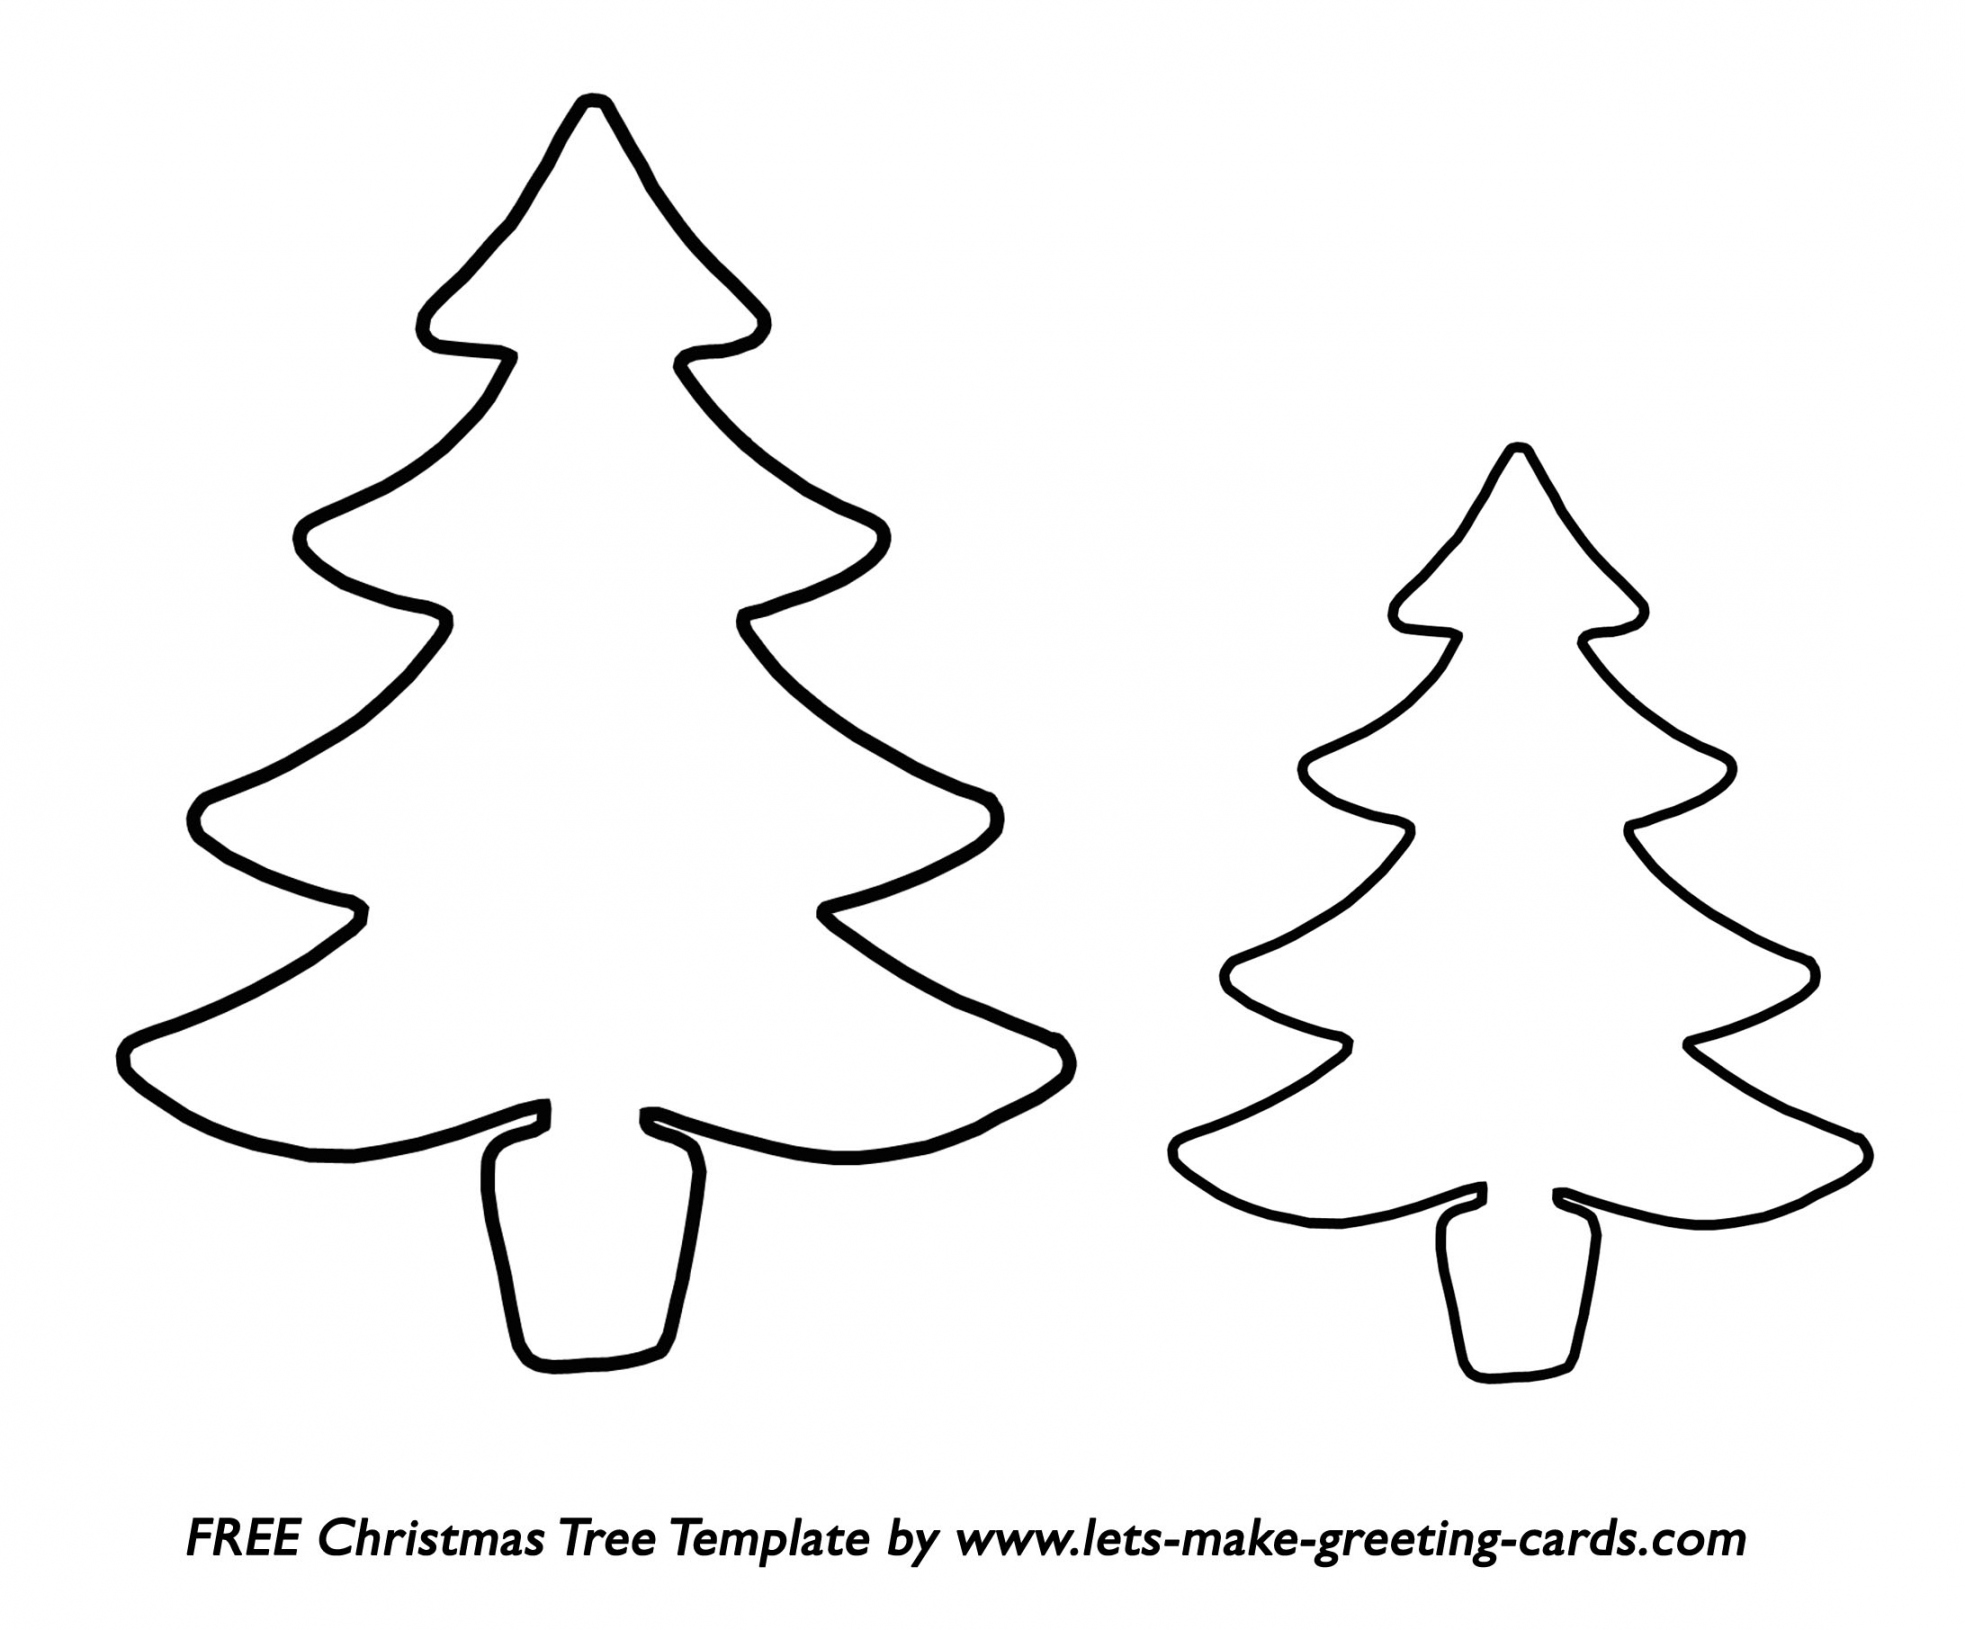 Free Christmas Tree Templates - FREE Printables - Christmas Tree Pattern Printable